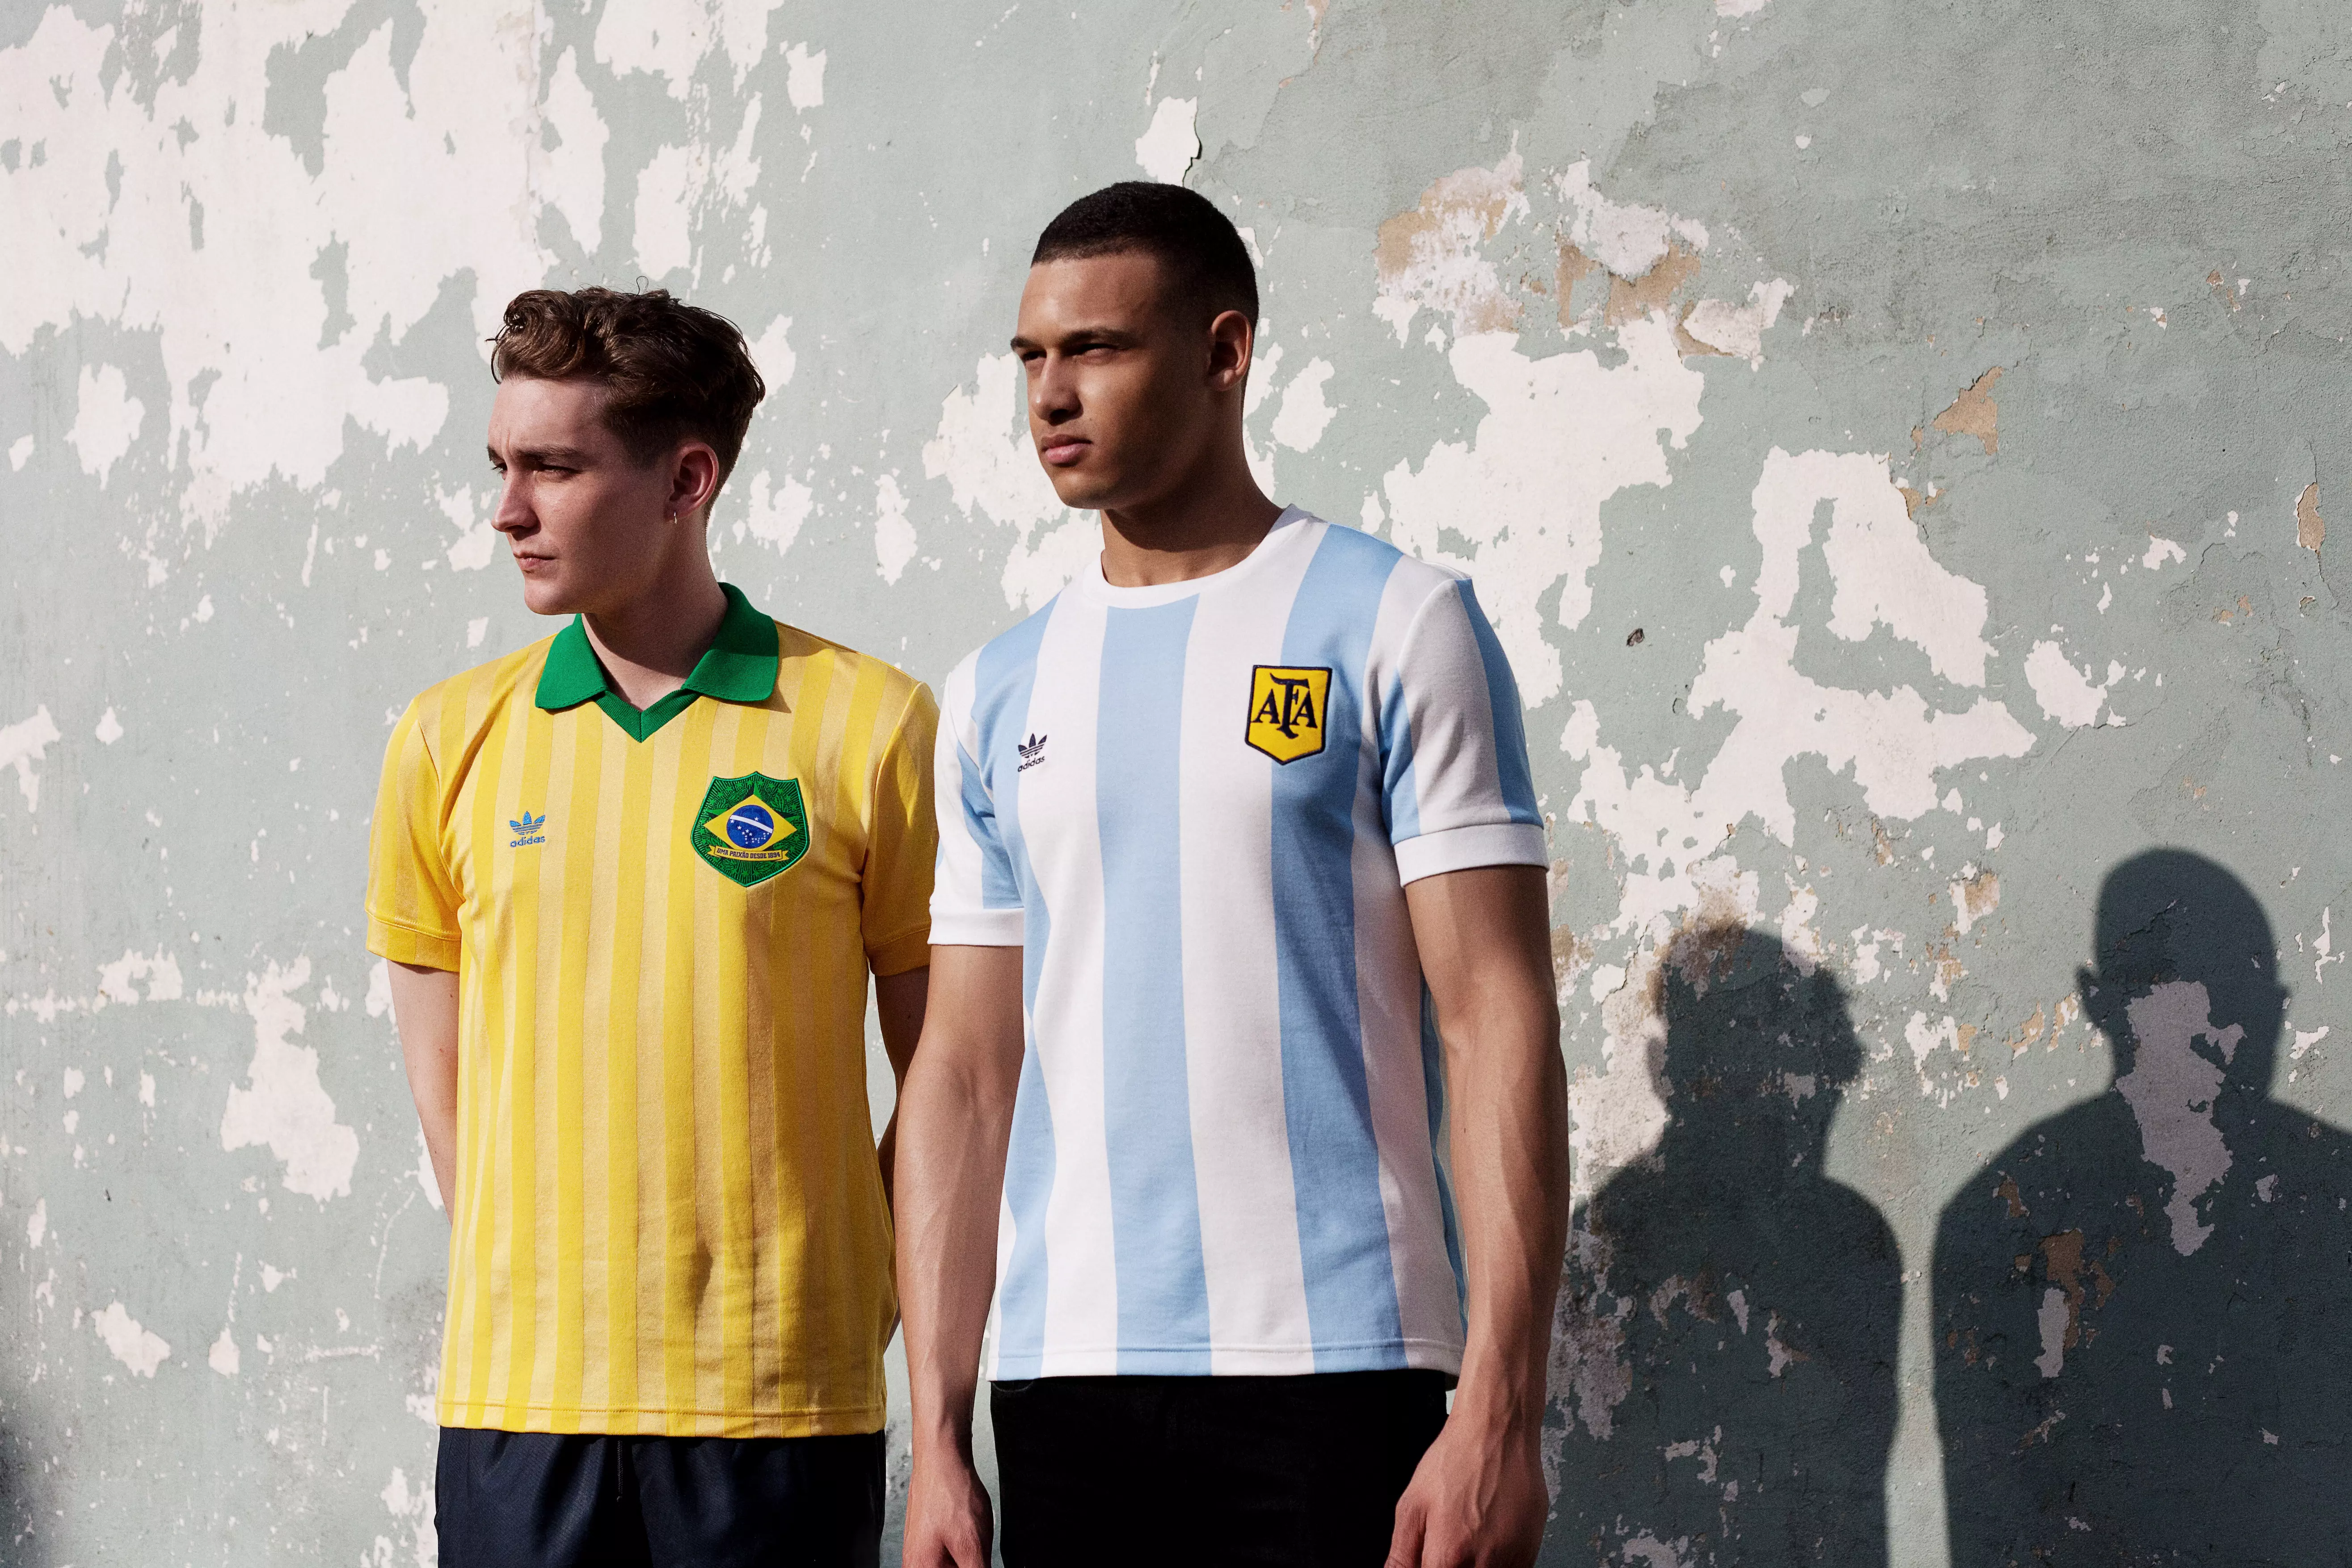 Adidas Originals Retro World Cup Shirts Re-Issue